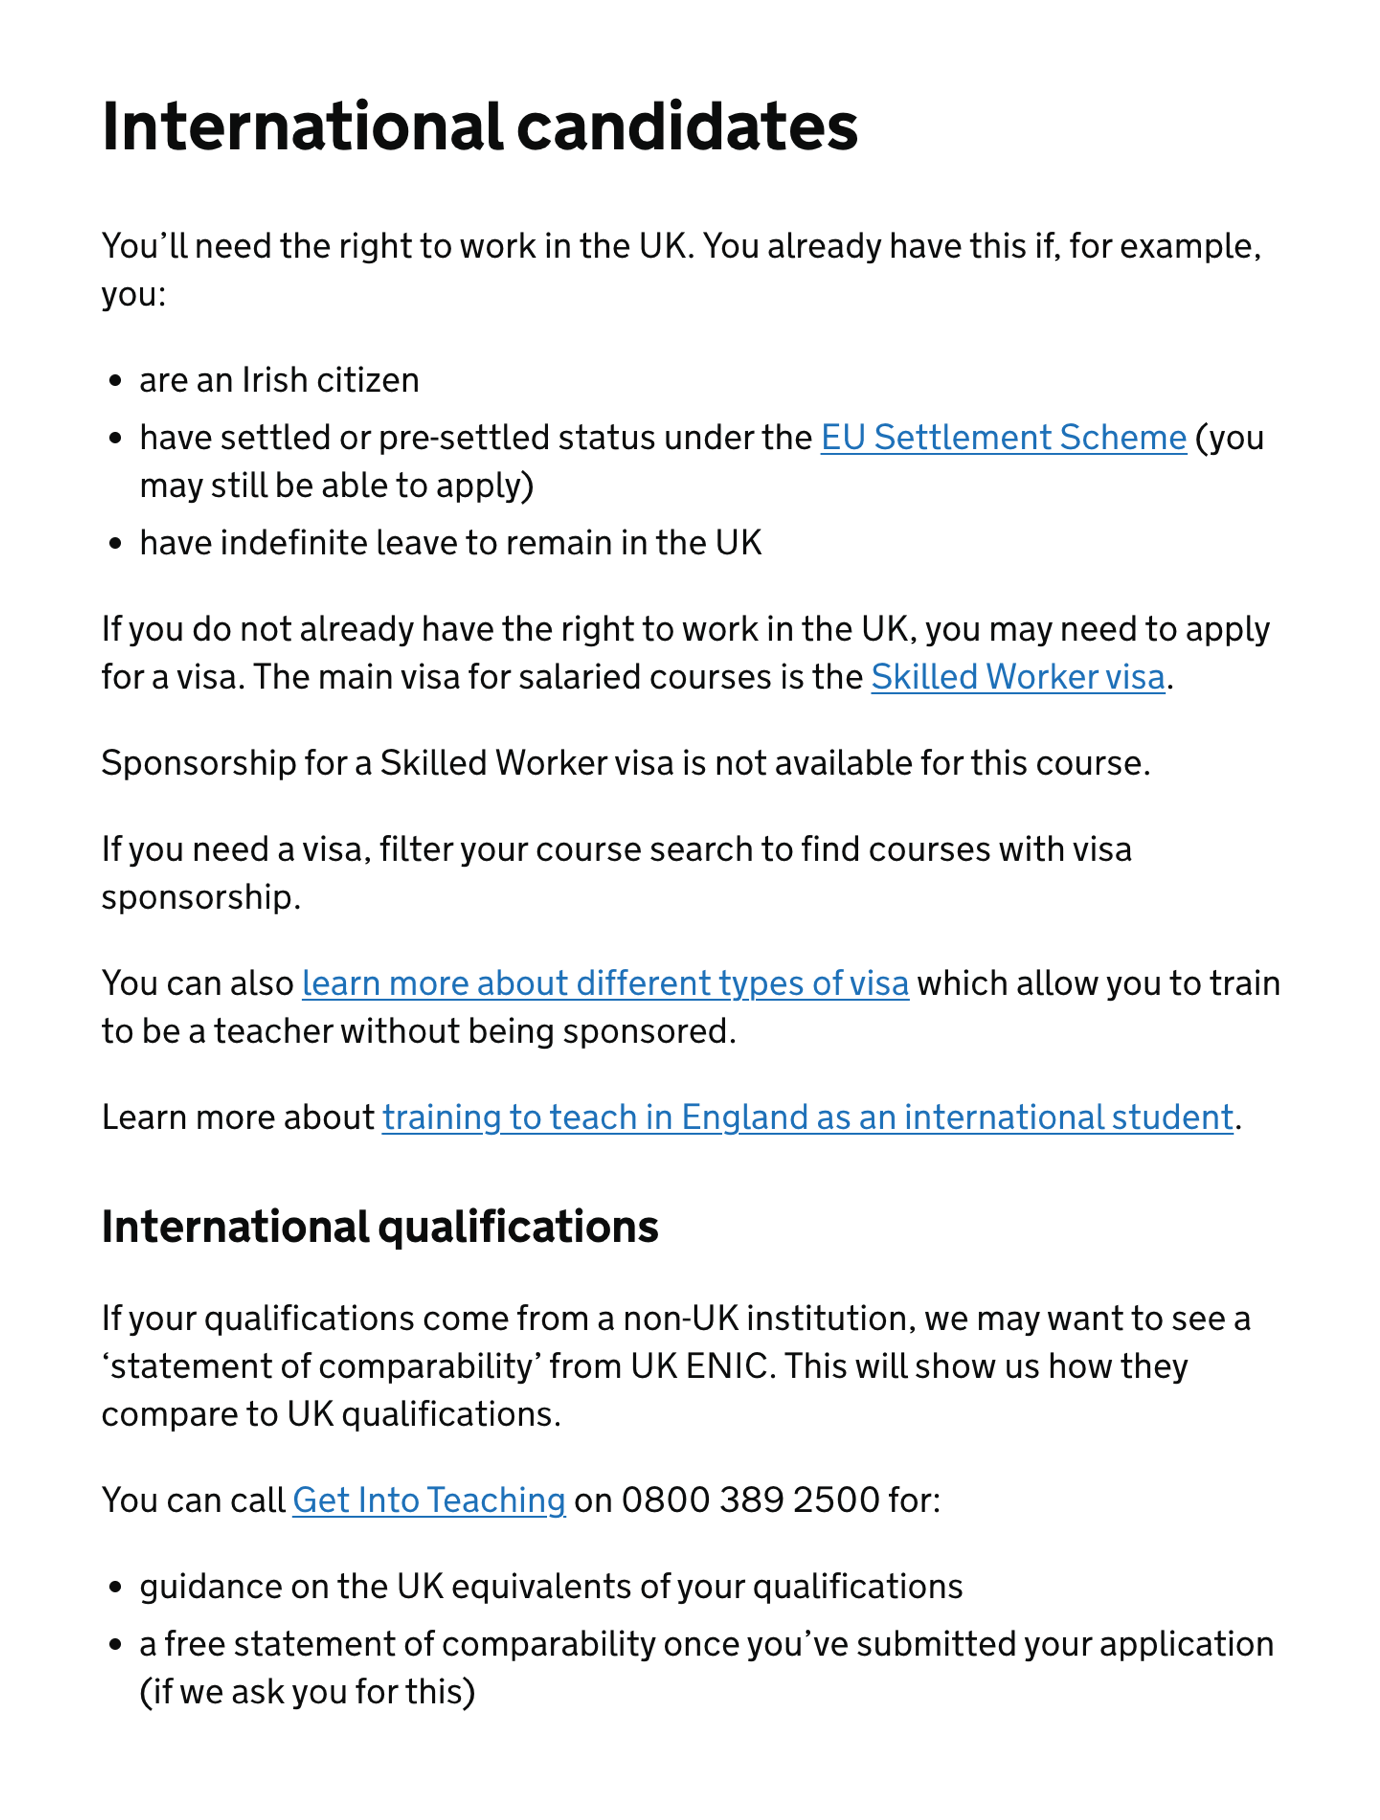 International candidates - salaried courses